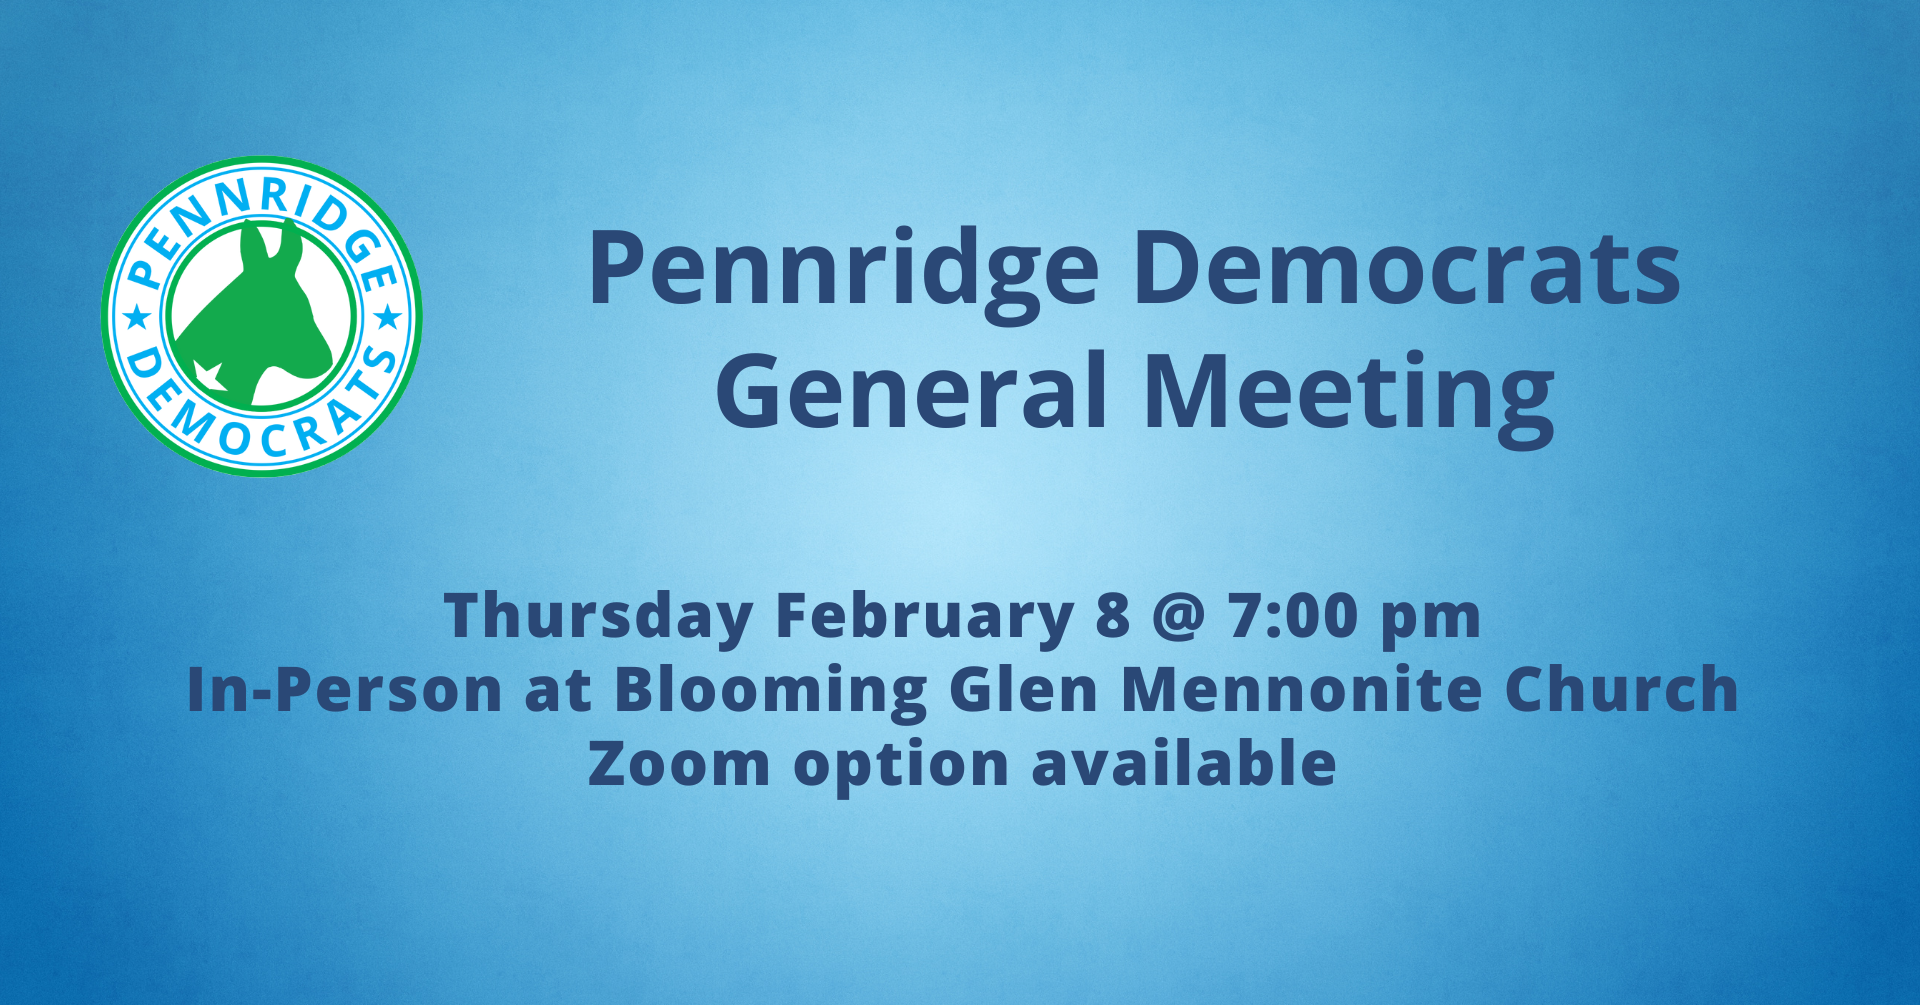 Pennridge Democrats February General Meeting - Thursday February 8 at 7:00 pm